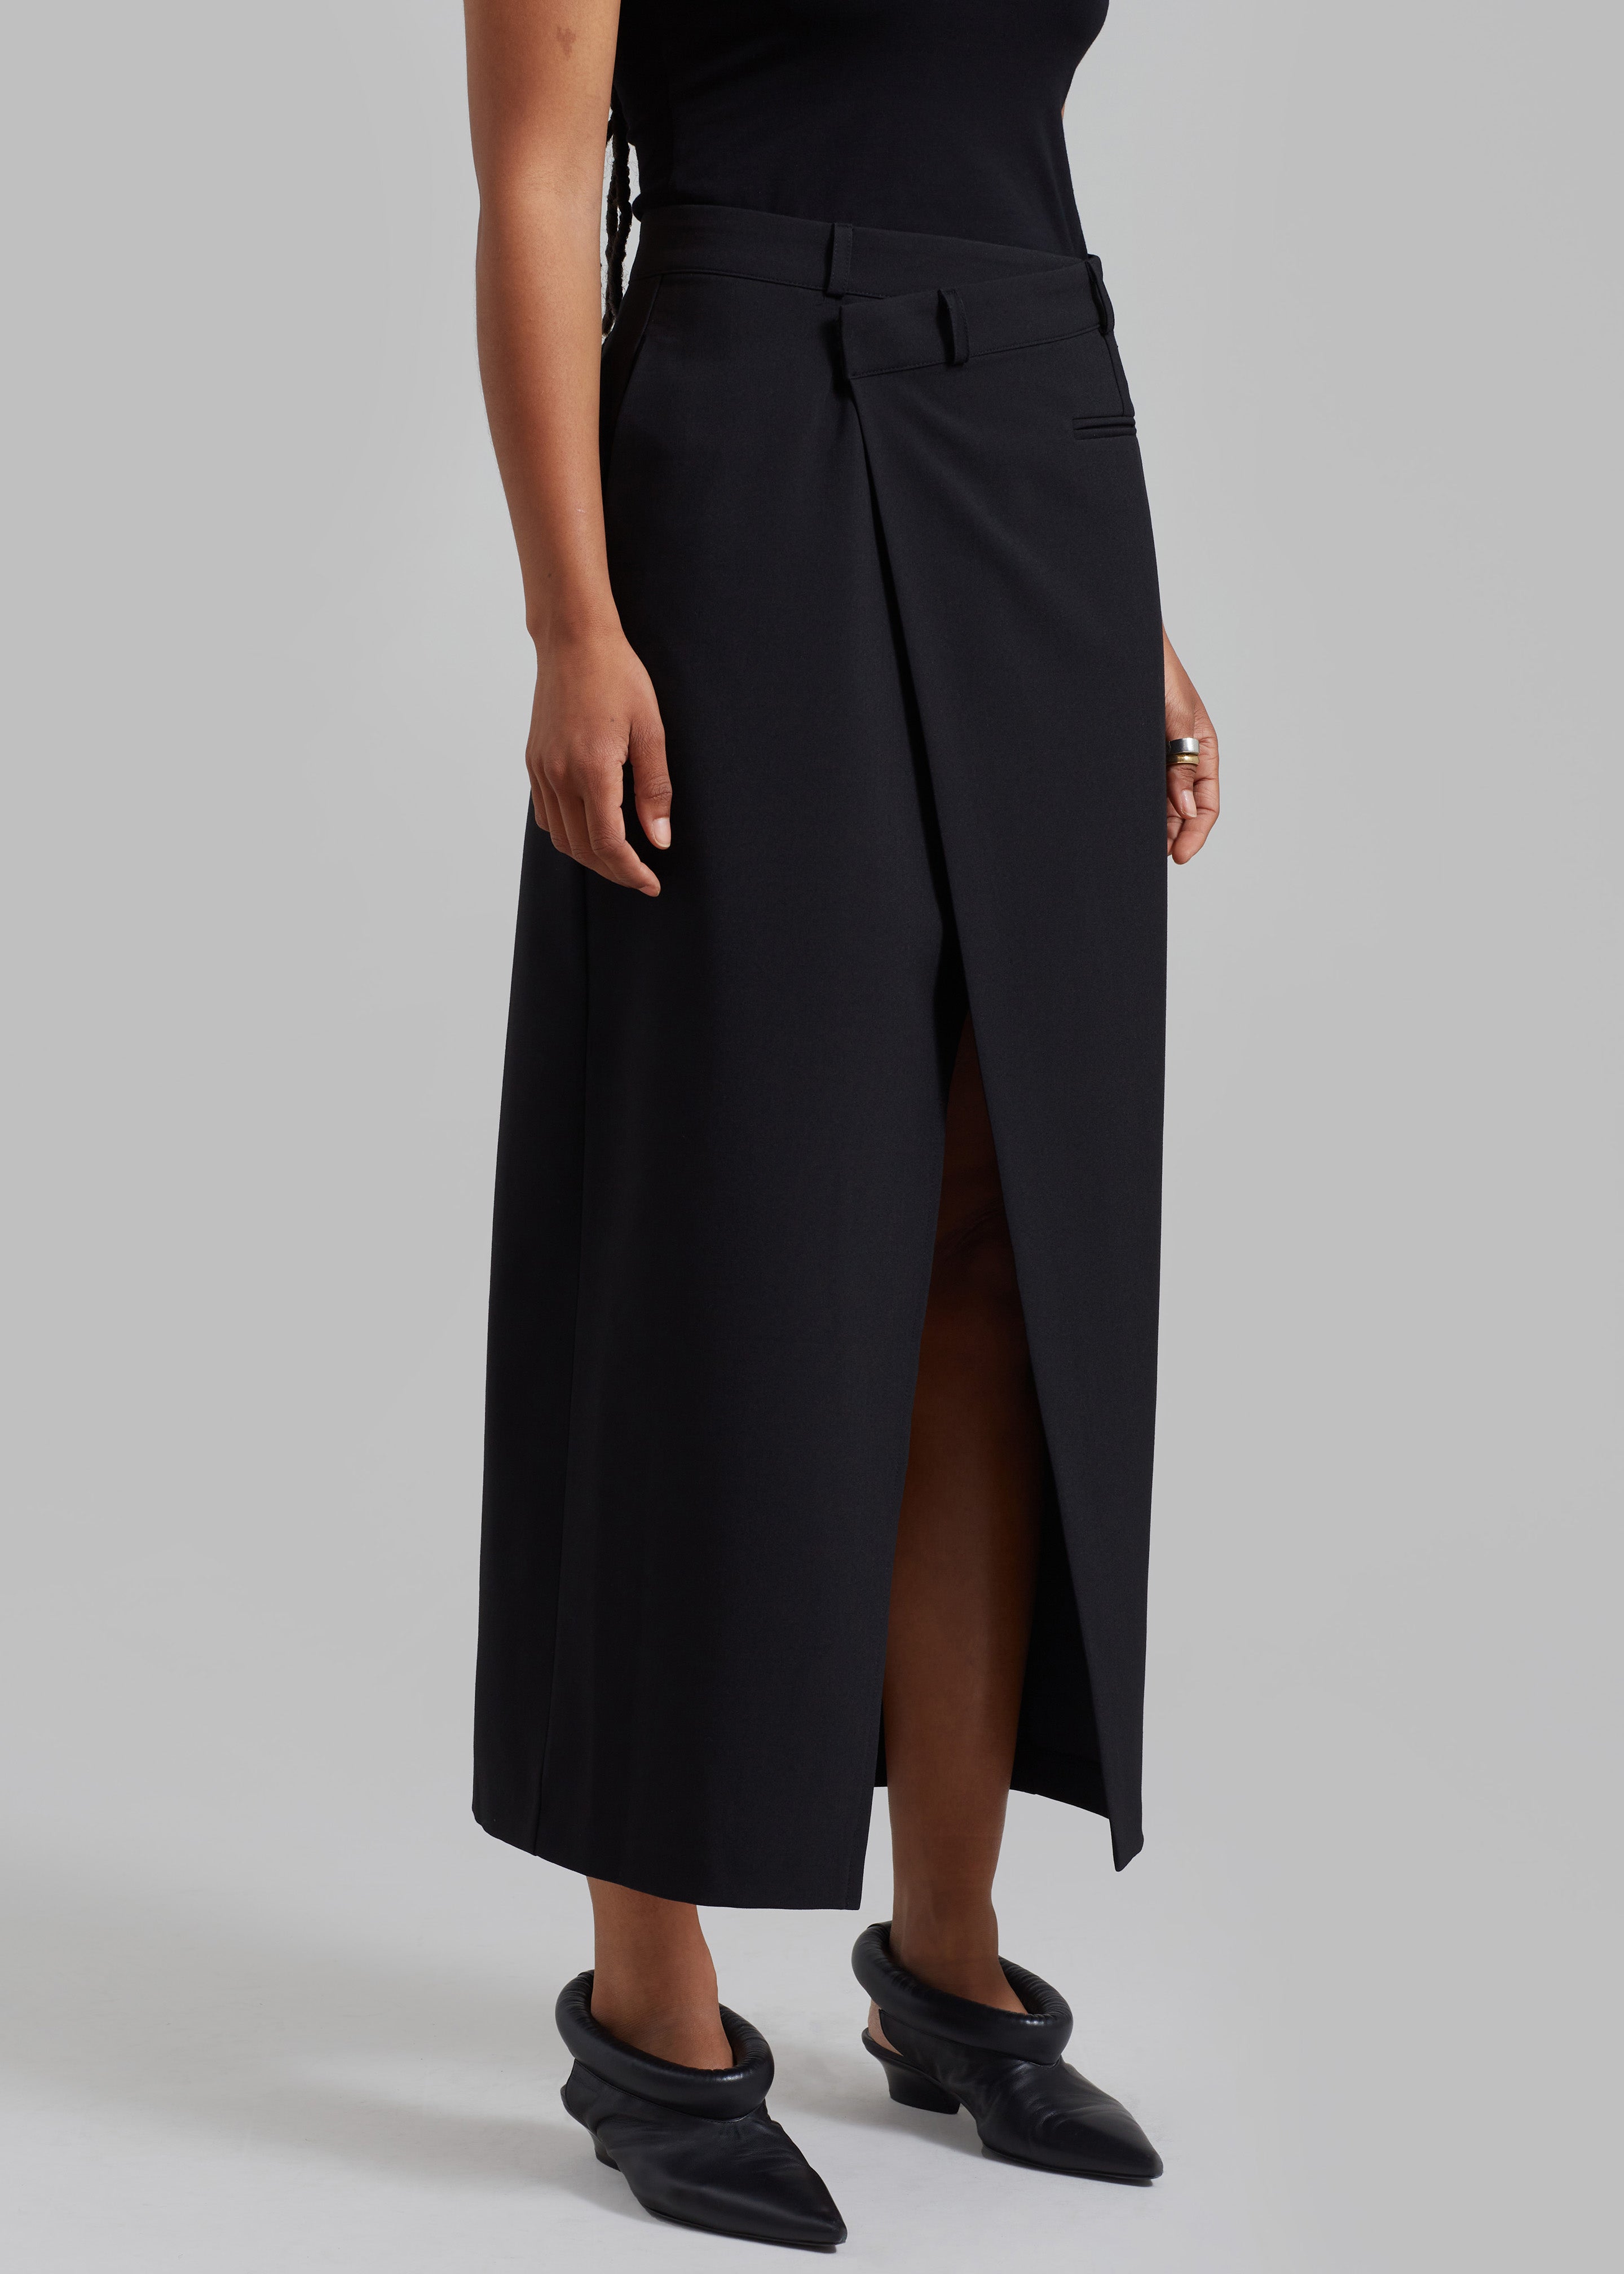 Annabel Asymmetric Midi Skirt - Black - 6